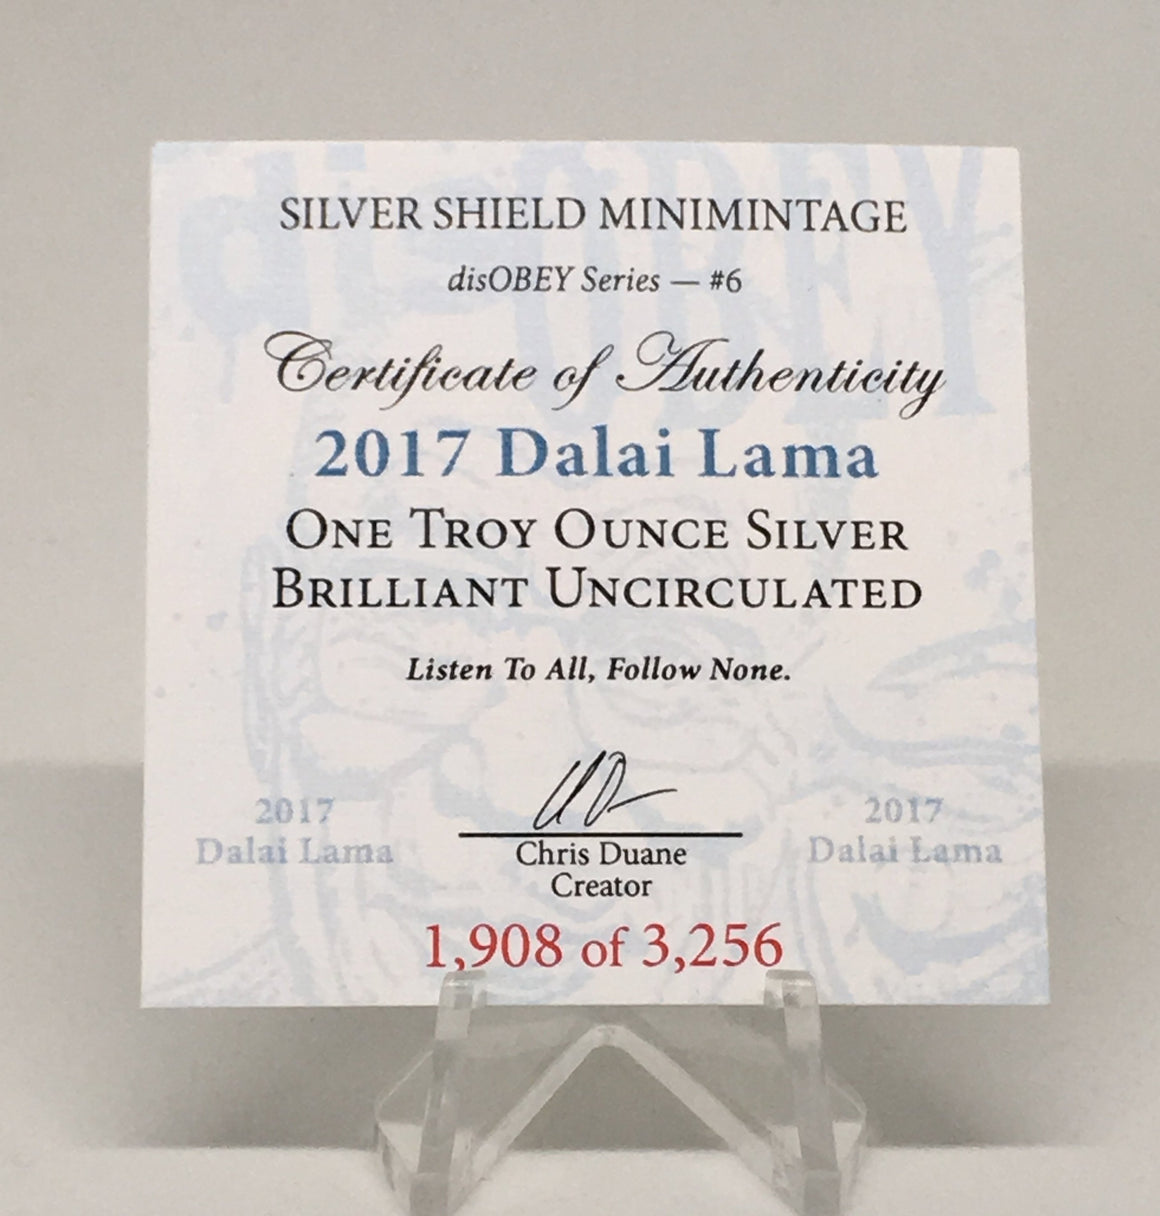 disOBEY Dalai Lama by Silver Shield, Mini Mintage - BU 1 oz .999 Silver Round